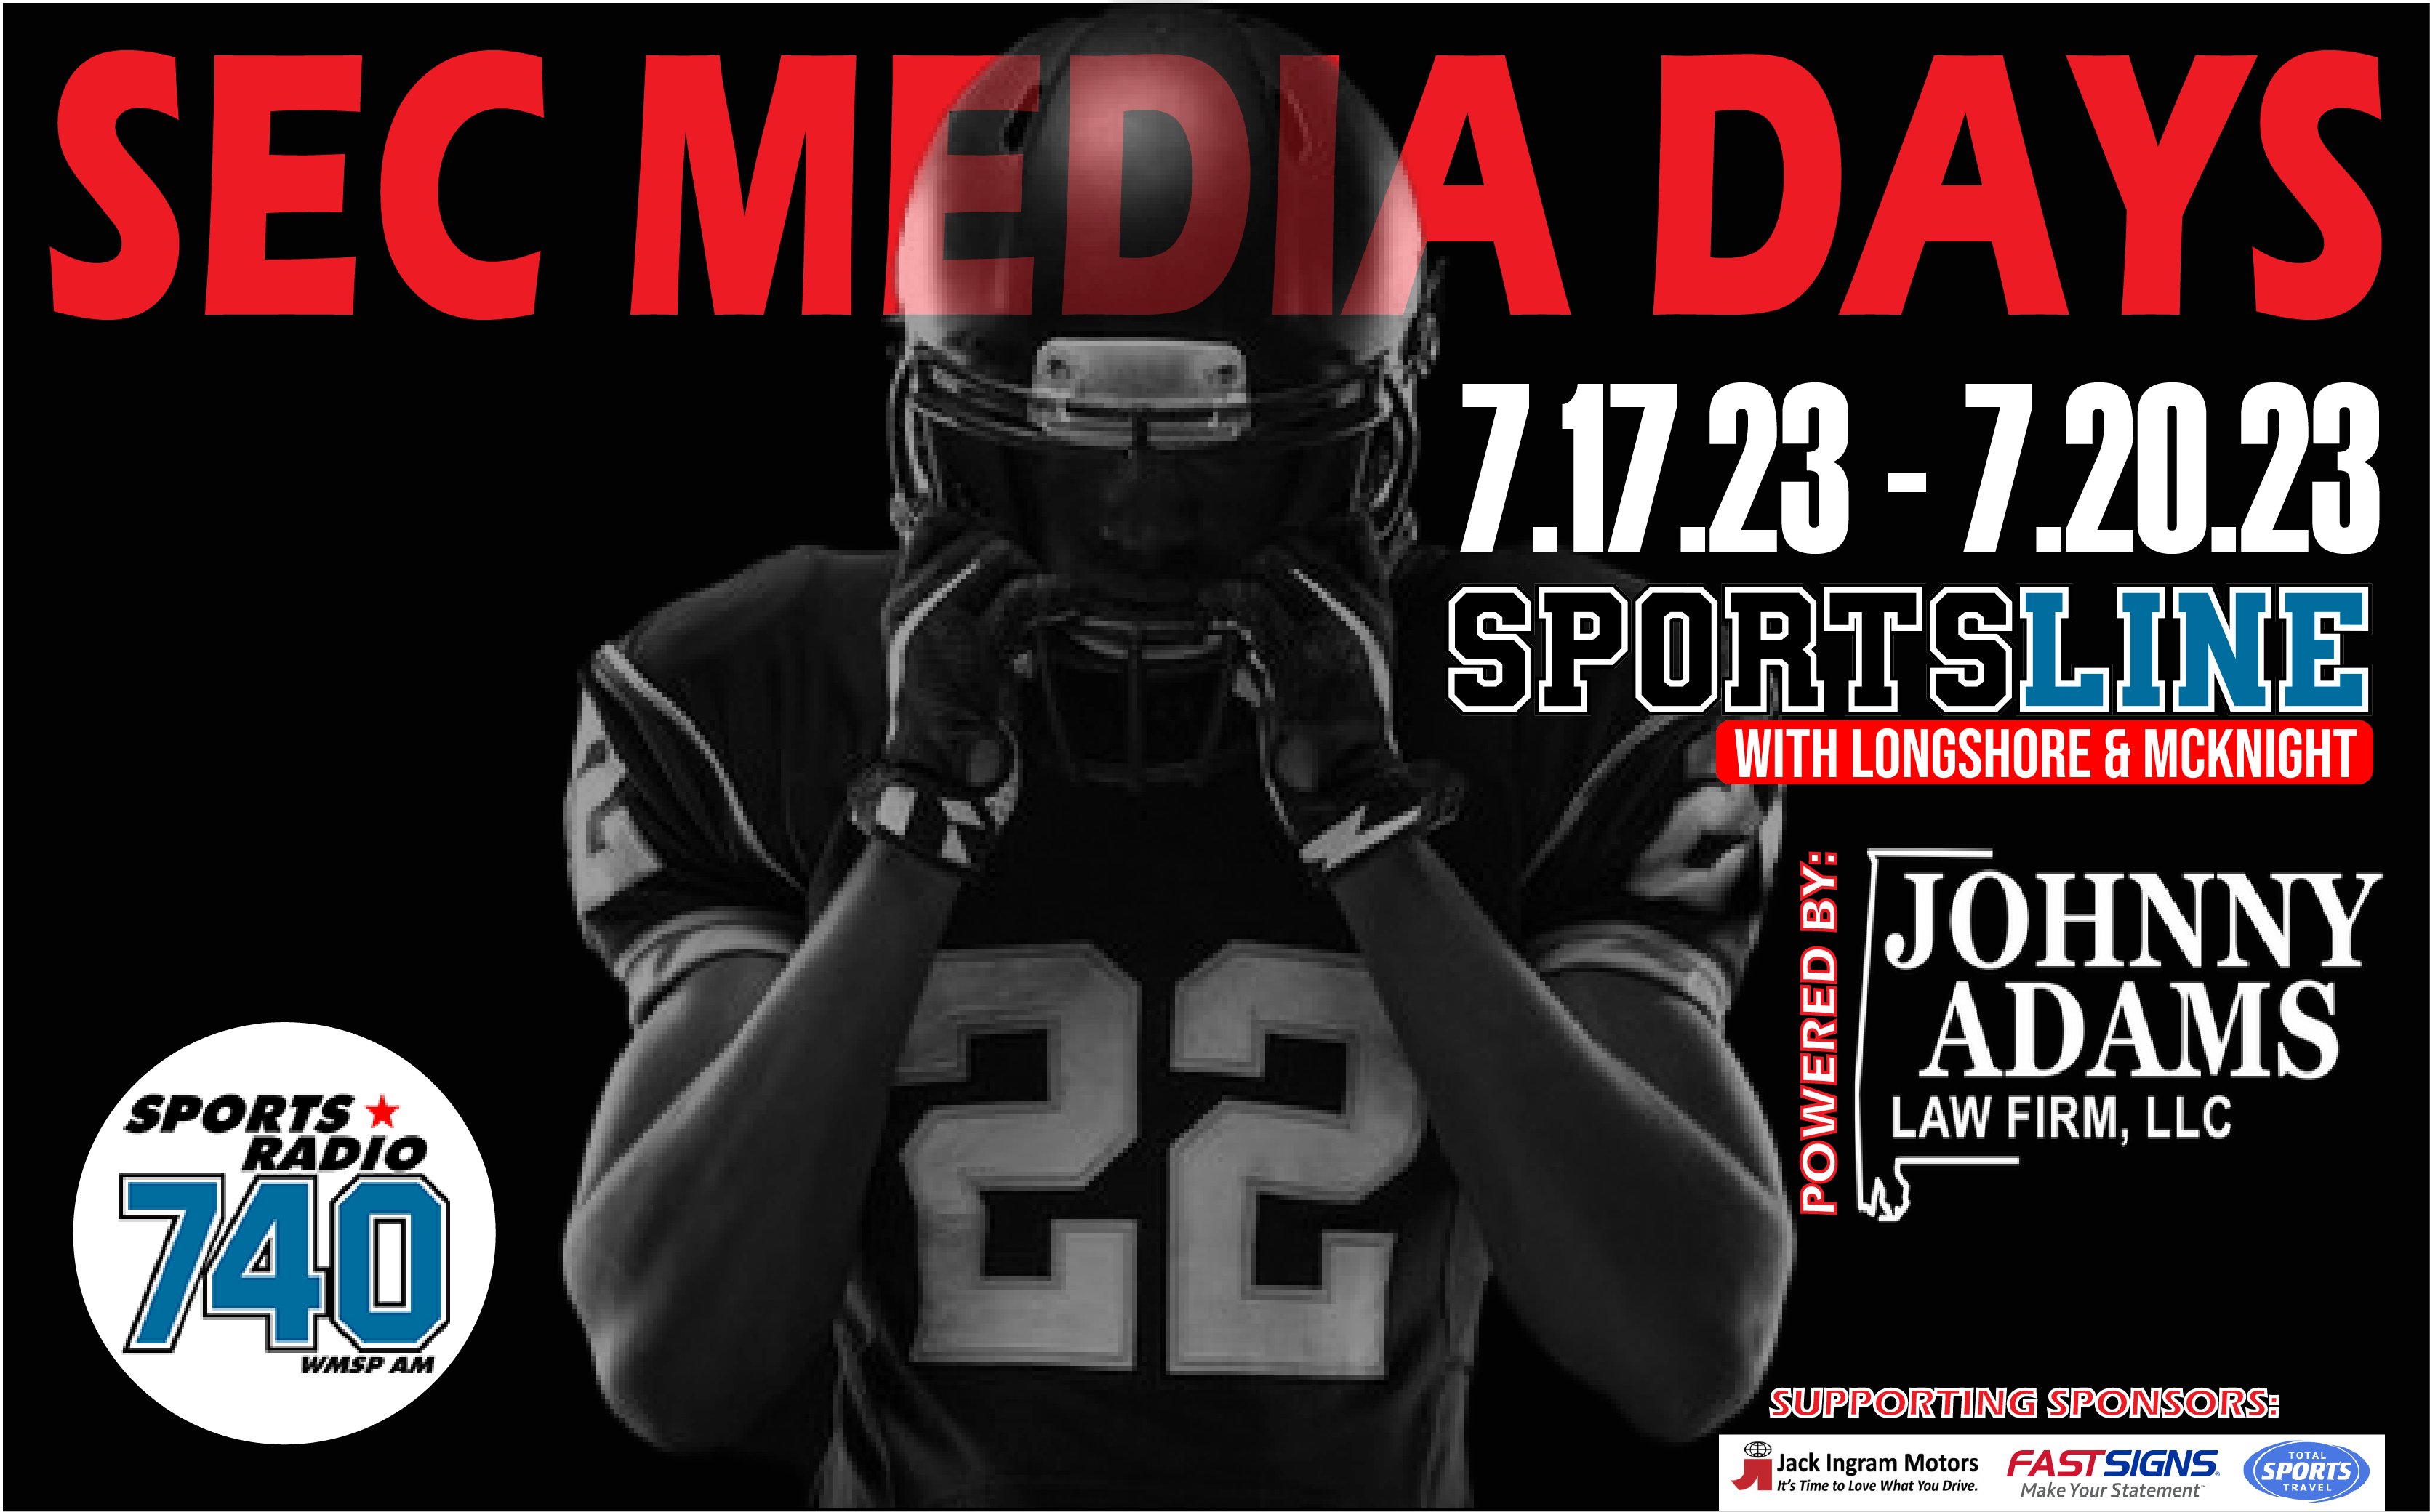 Sports Radio 740 Covering SEC Media Days